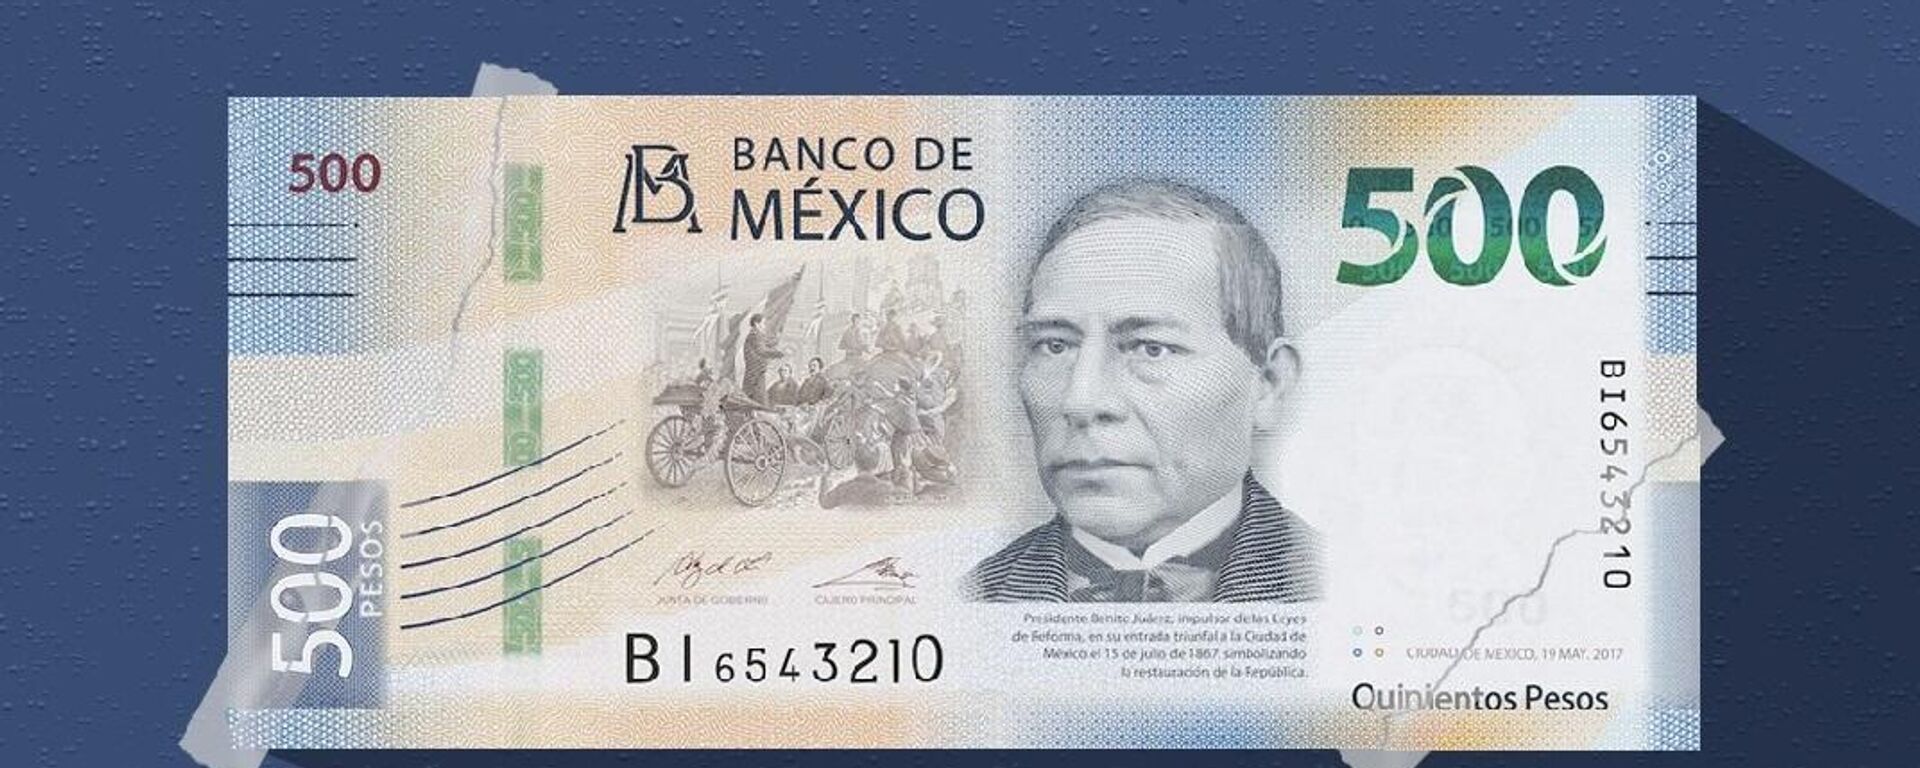 Peso mexicano. - Sputnik Mundo, 1920, 16.12.2021